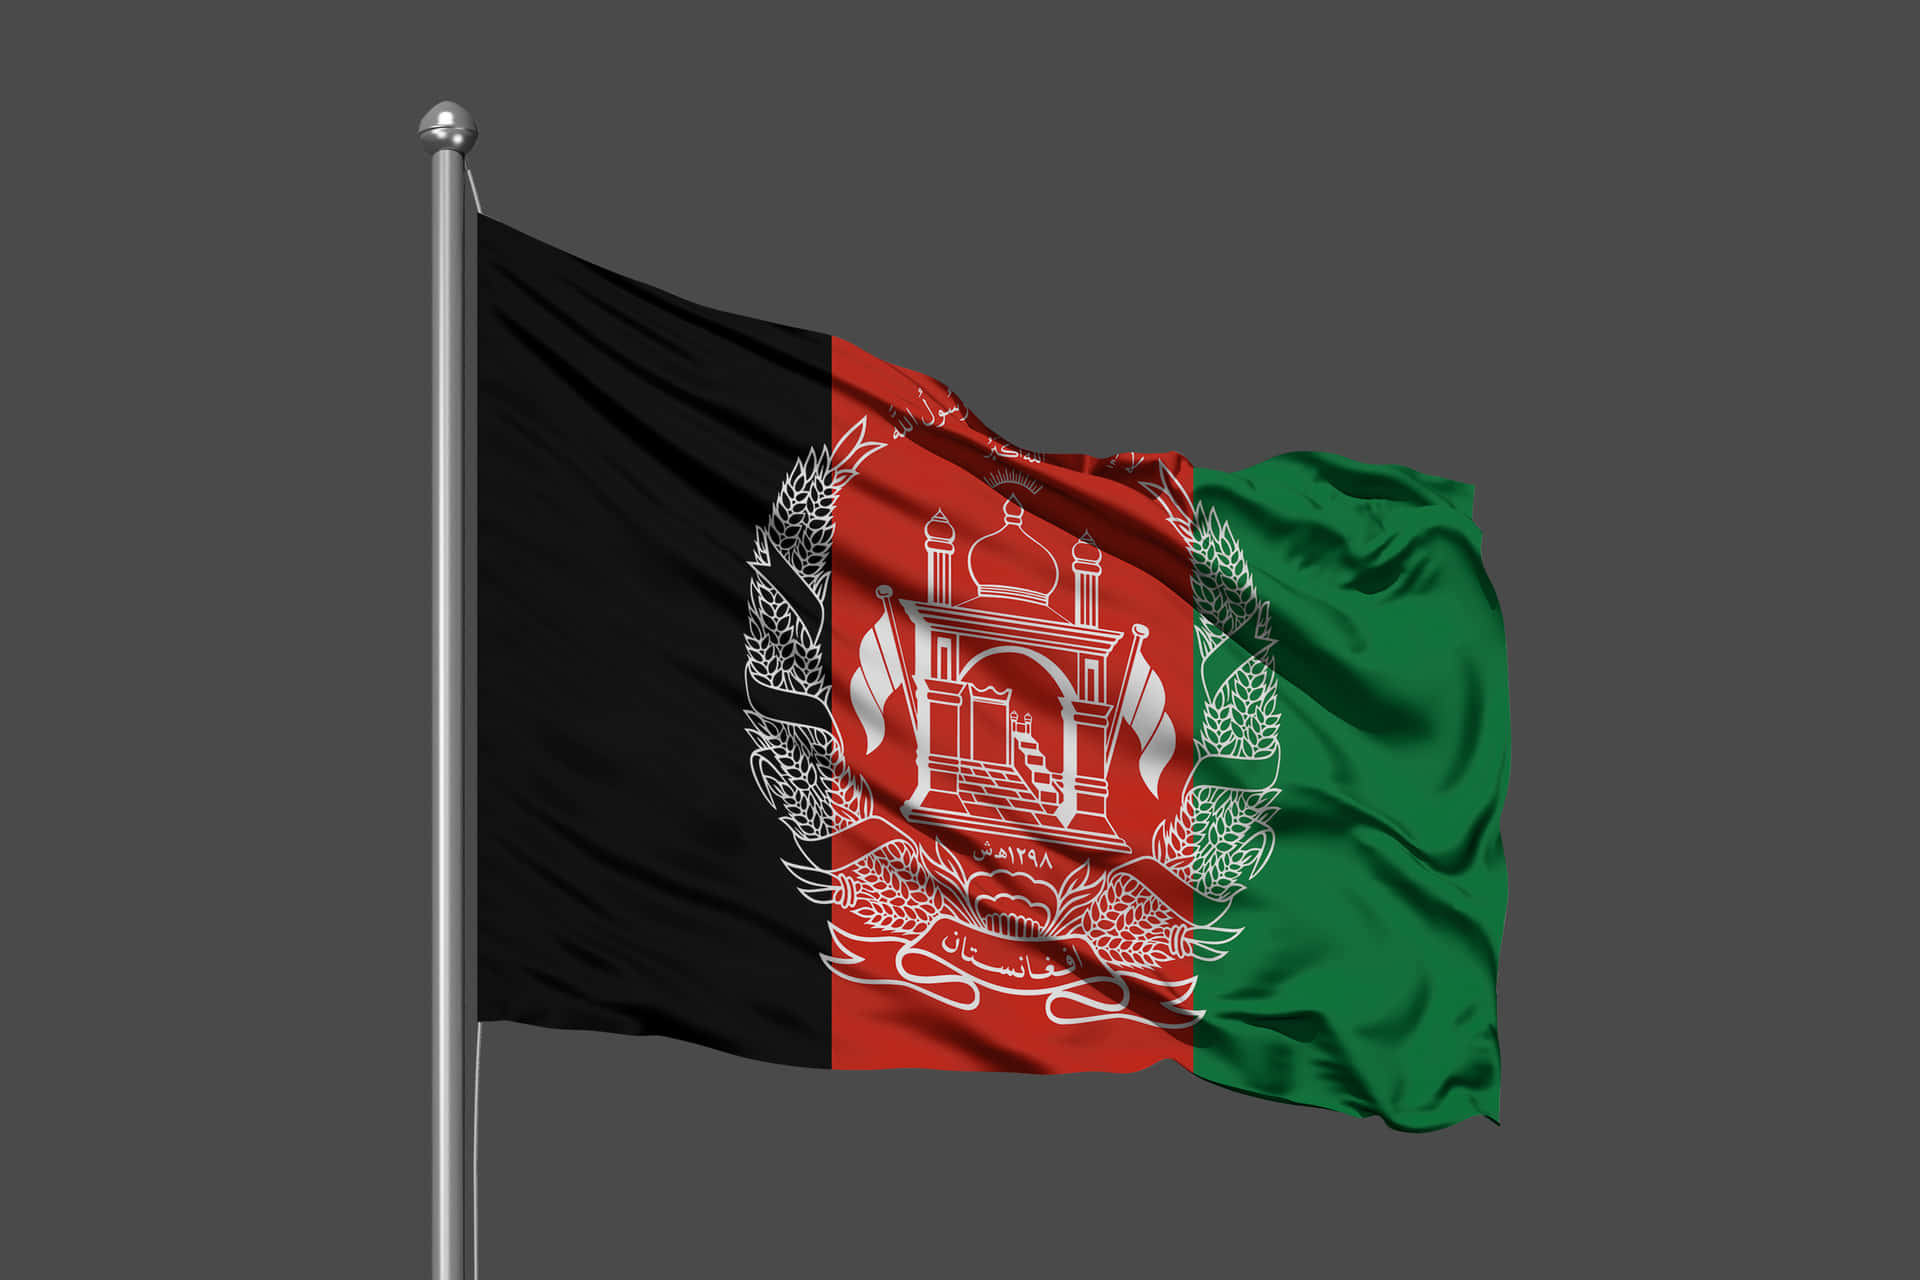 Hintergrundbildvon Afghanistan